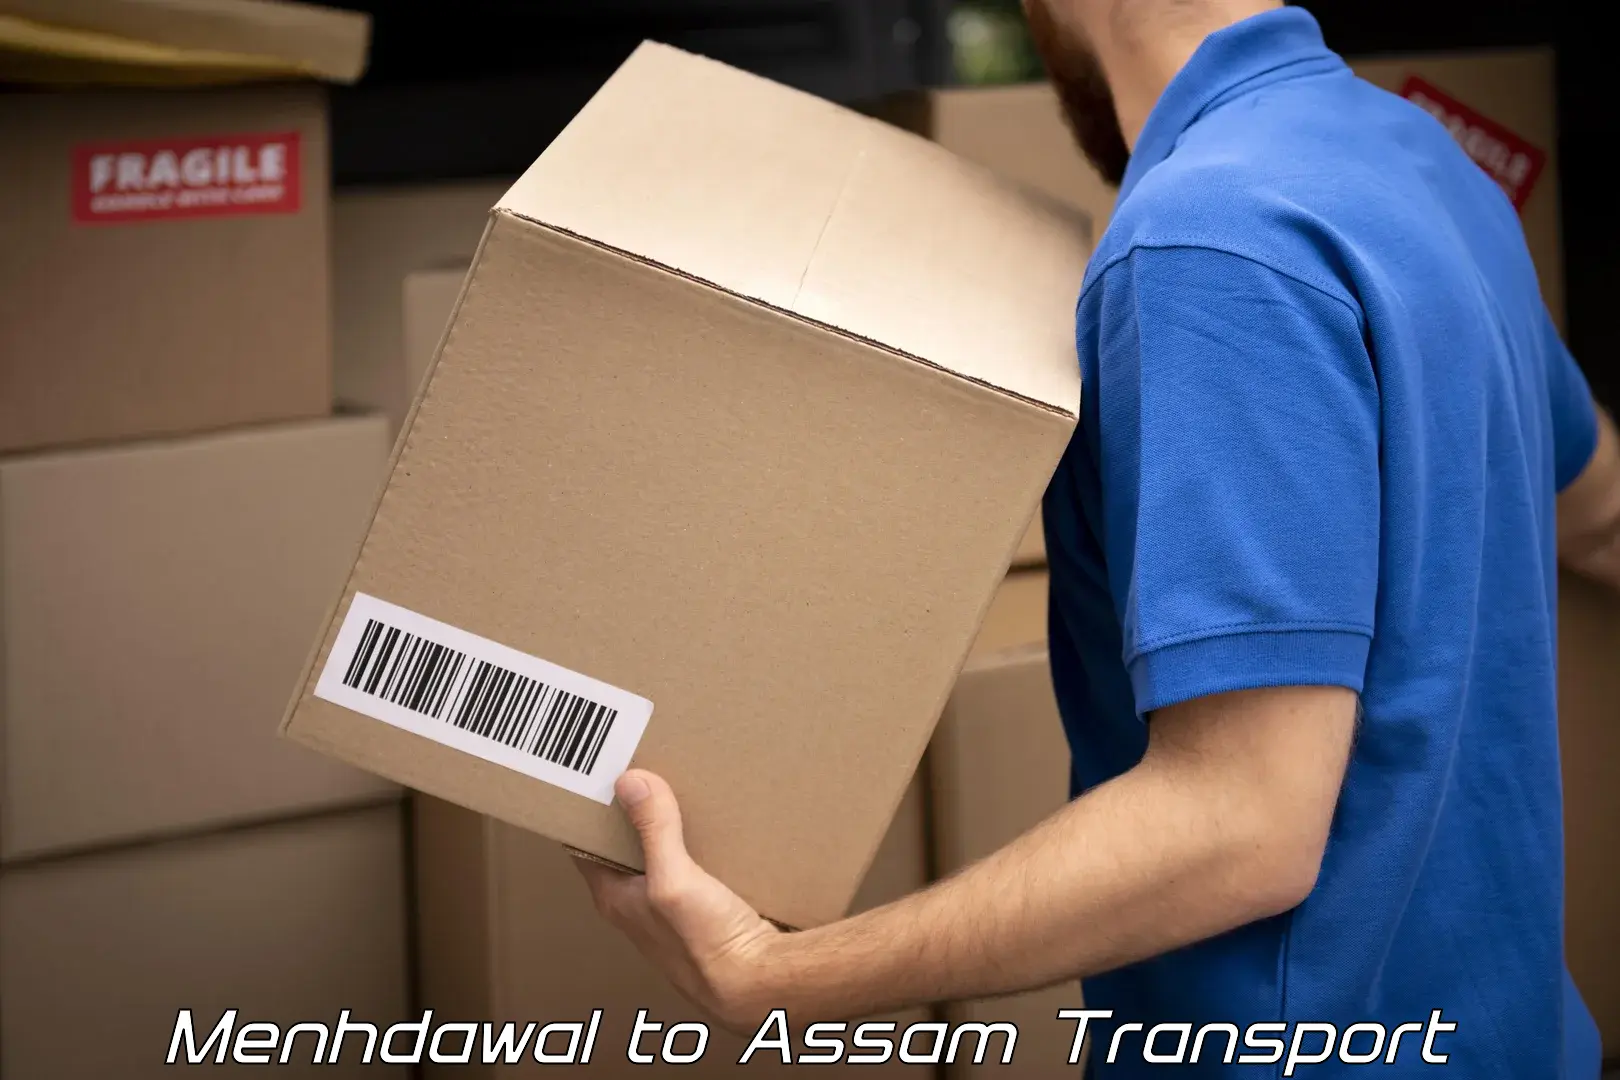 Vehicle parcel service Menhdawal to Dotma